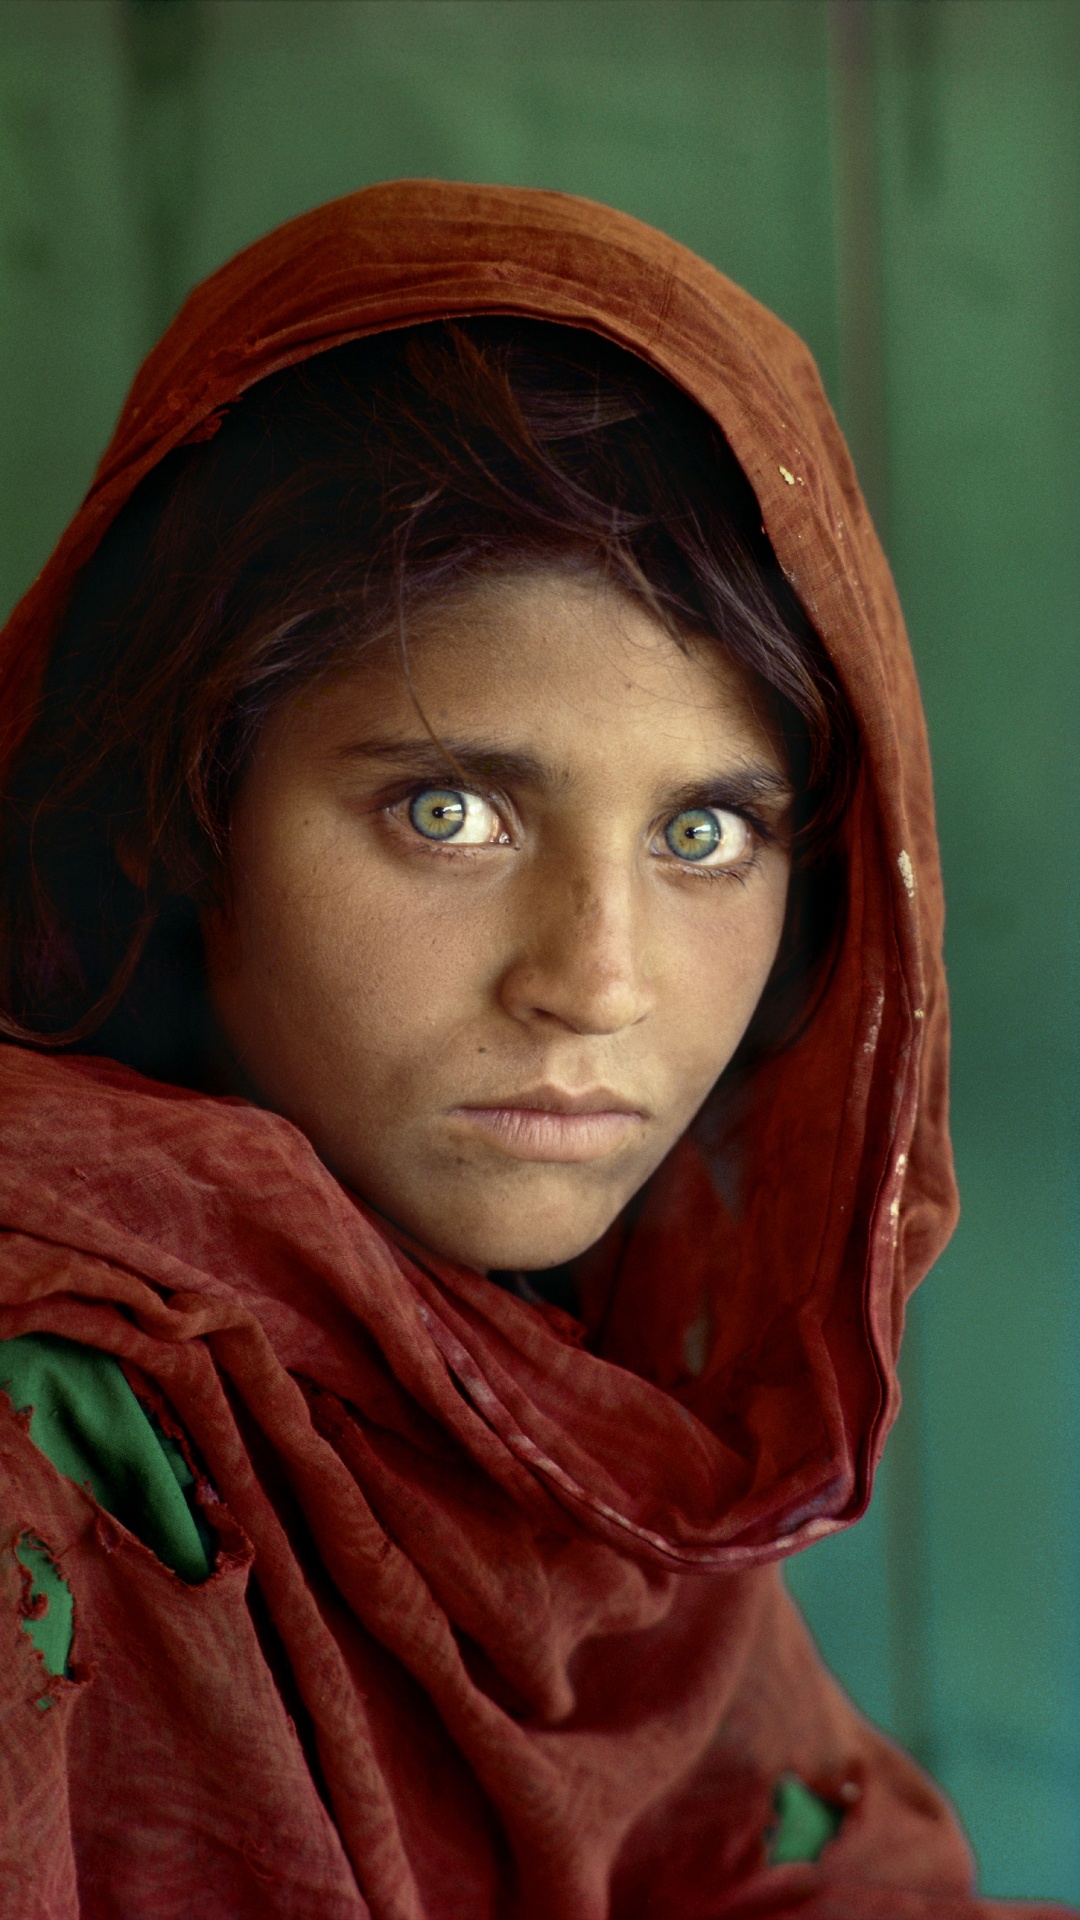 Afghanisches Mädchen, Afghanistan, National Geographic, Gesicht, Auge. Wallpaper in 1080x1920 Resolution